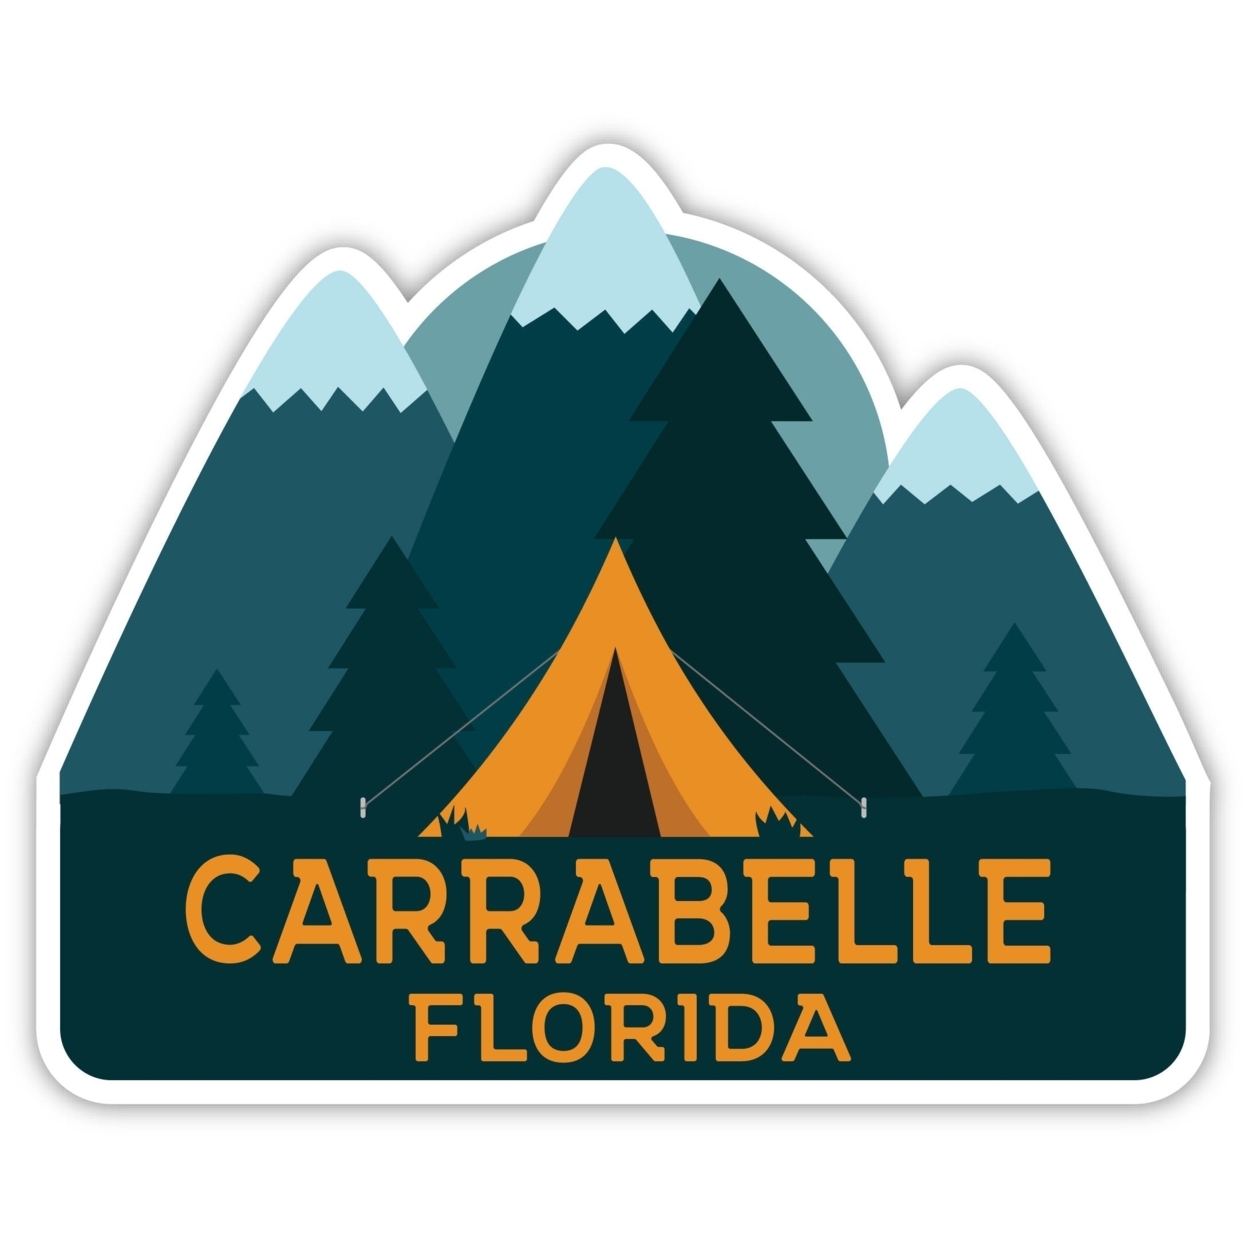 Carrabelle Florida Souvenir Decorative Stickers (Choose Theme And Size) - 4-Pack, 4-Inch, Tent